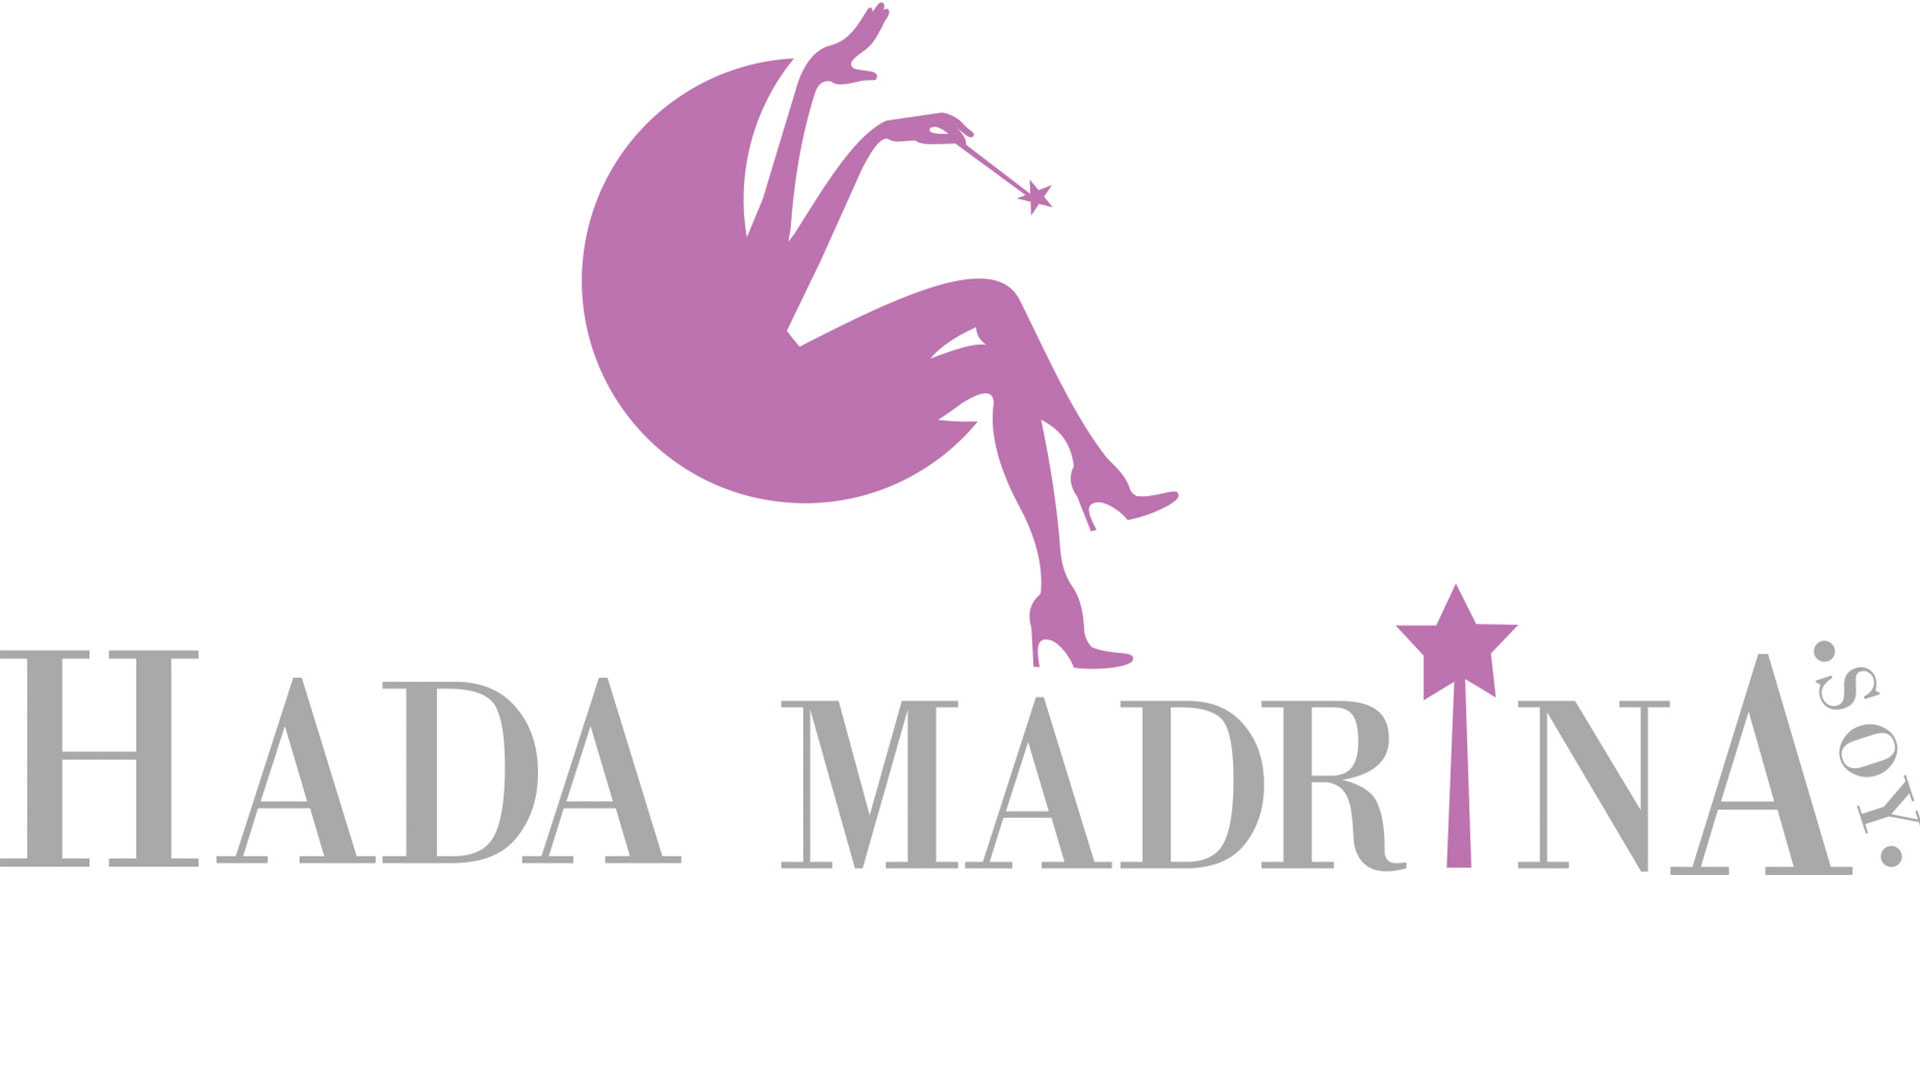 Agenda de Boda - Hada Madrina Events (Digital para imprimir)